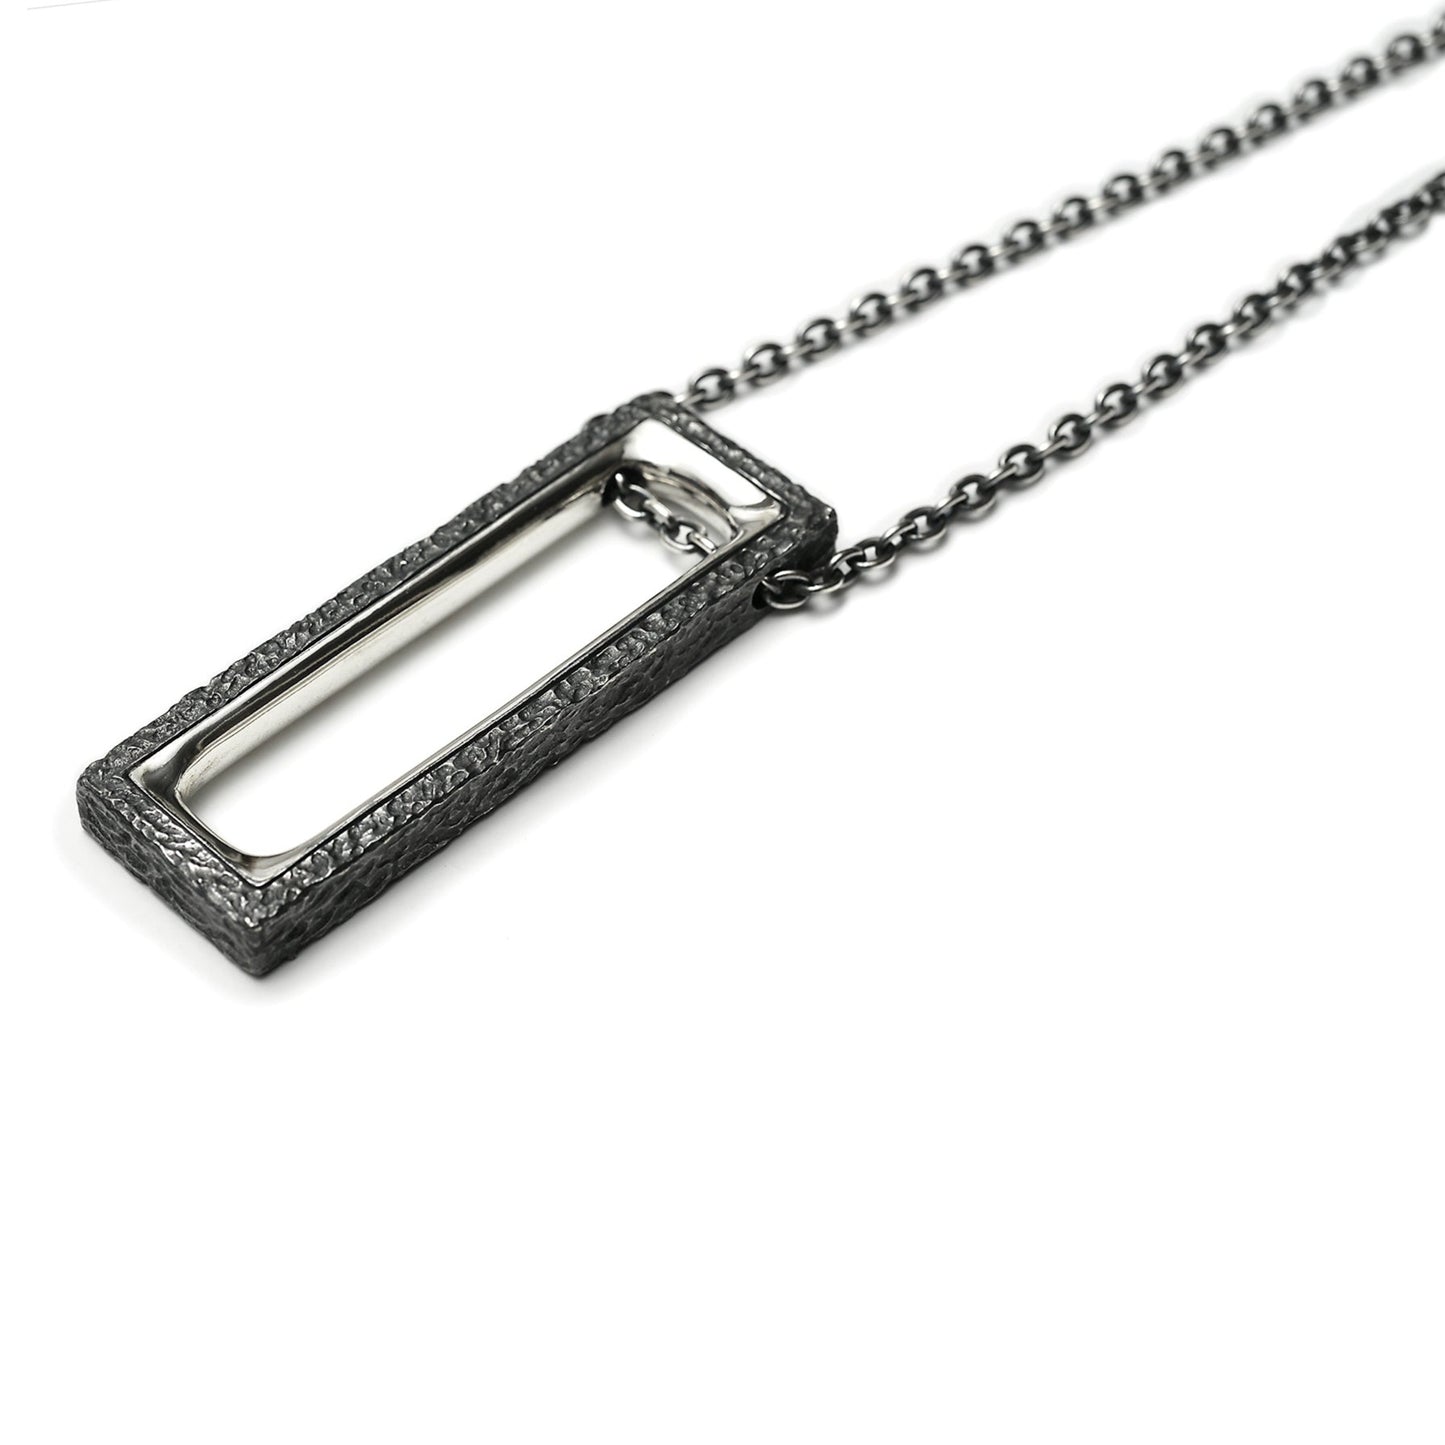 P-58 essence - Silver necklace with original clasp of 75 cm